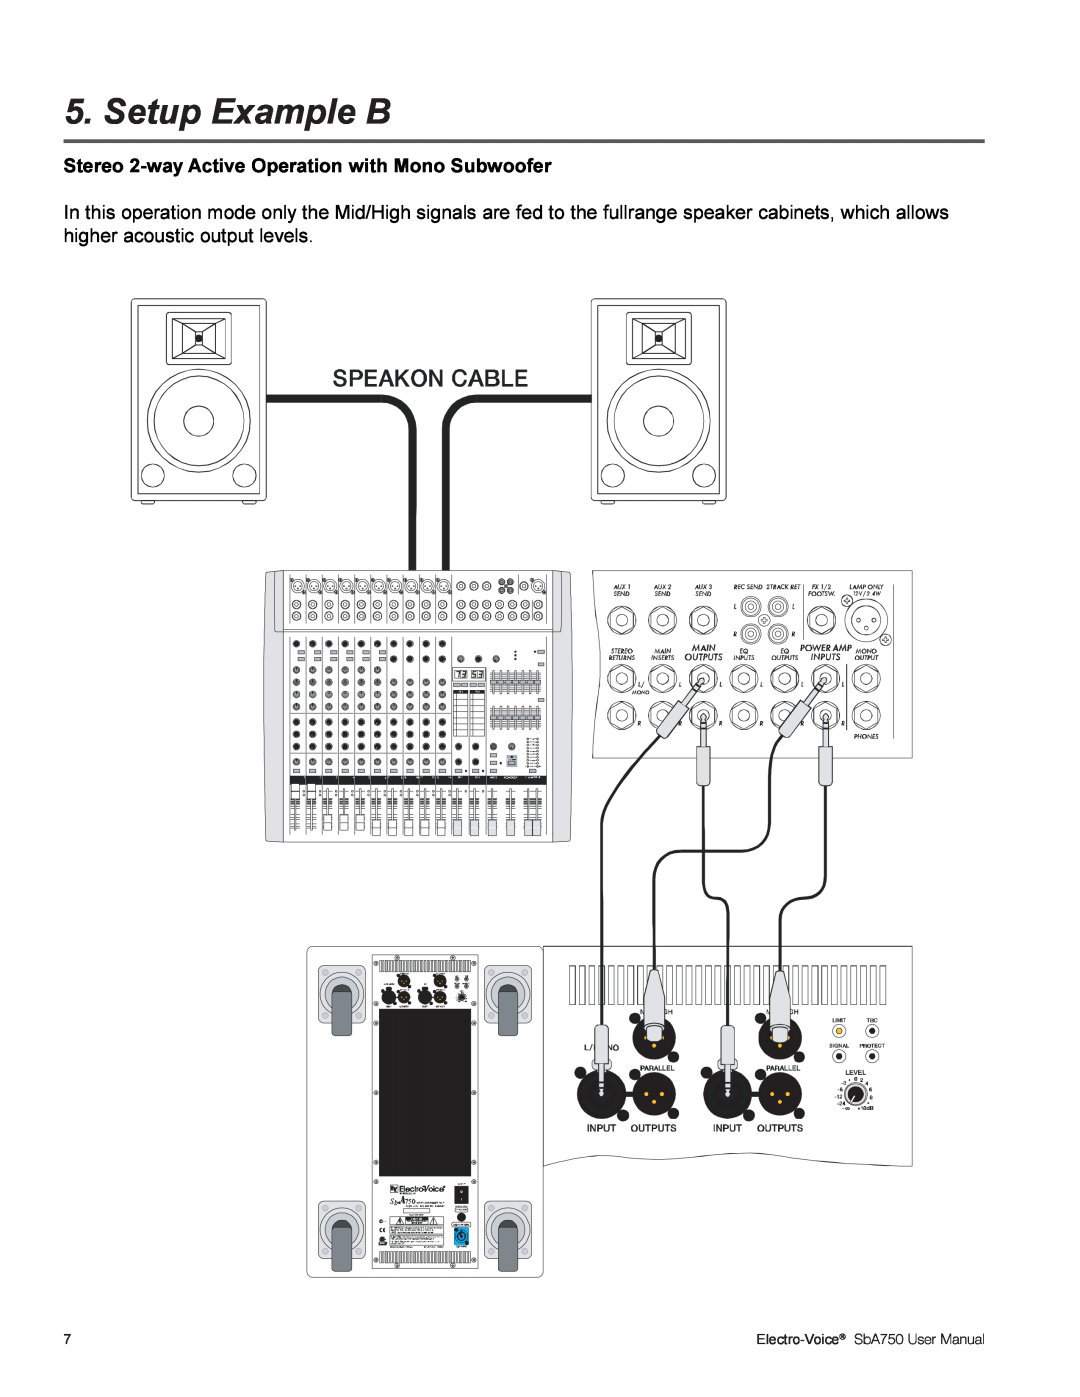 Electro-Voice SBA750 user manual Setup Example B, Stereo 2-wayActive Operation with Mono Subwoofer, Electro-Voice 